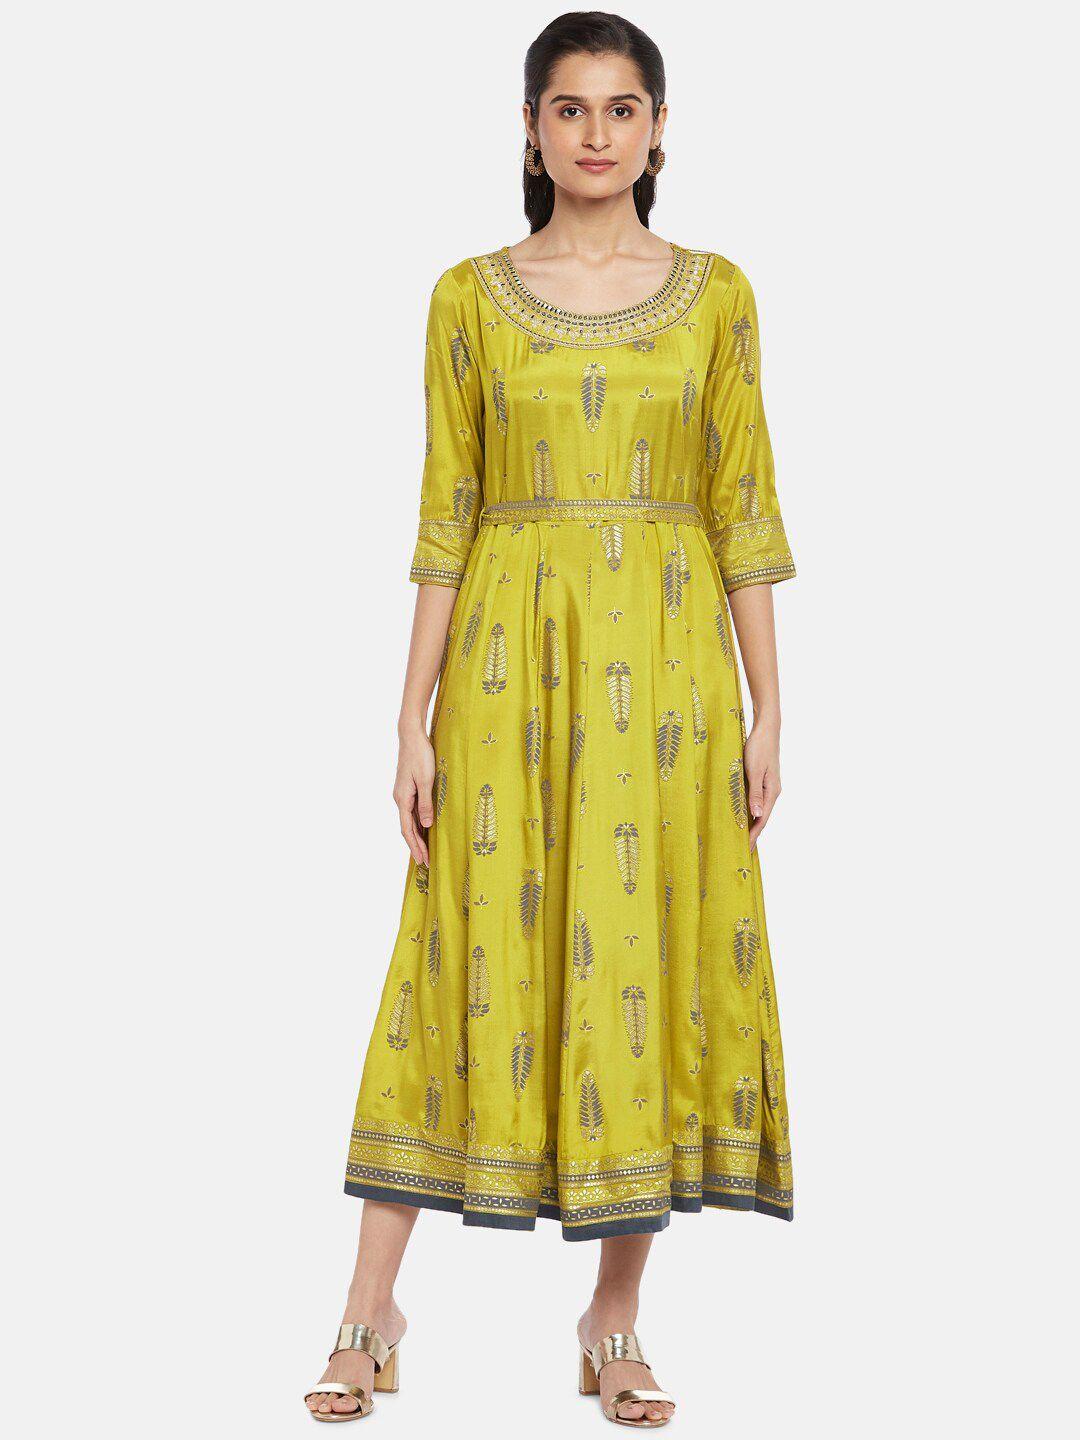 rangmanch-by-pantaloons-women-mustard-yellow-ethnic-motifs-a-line-midi-dress